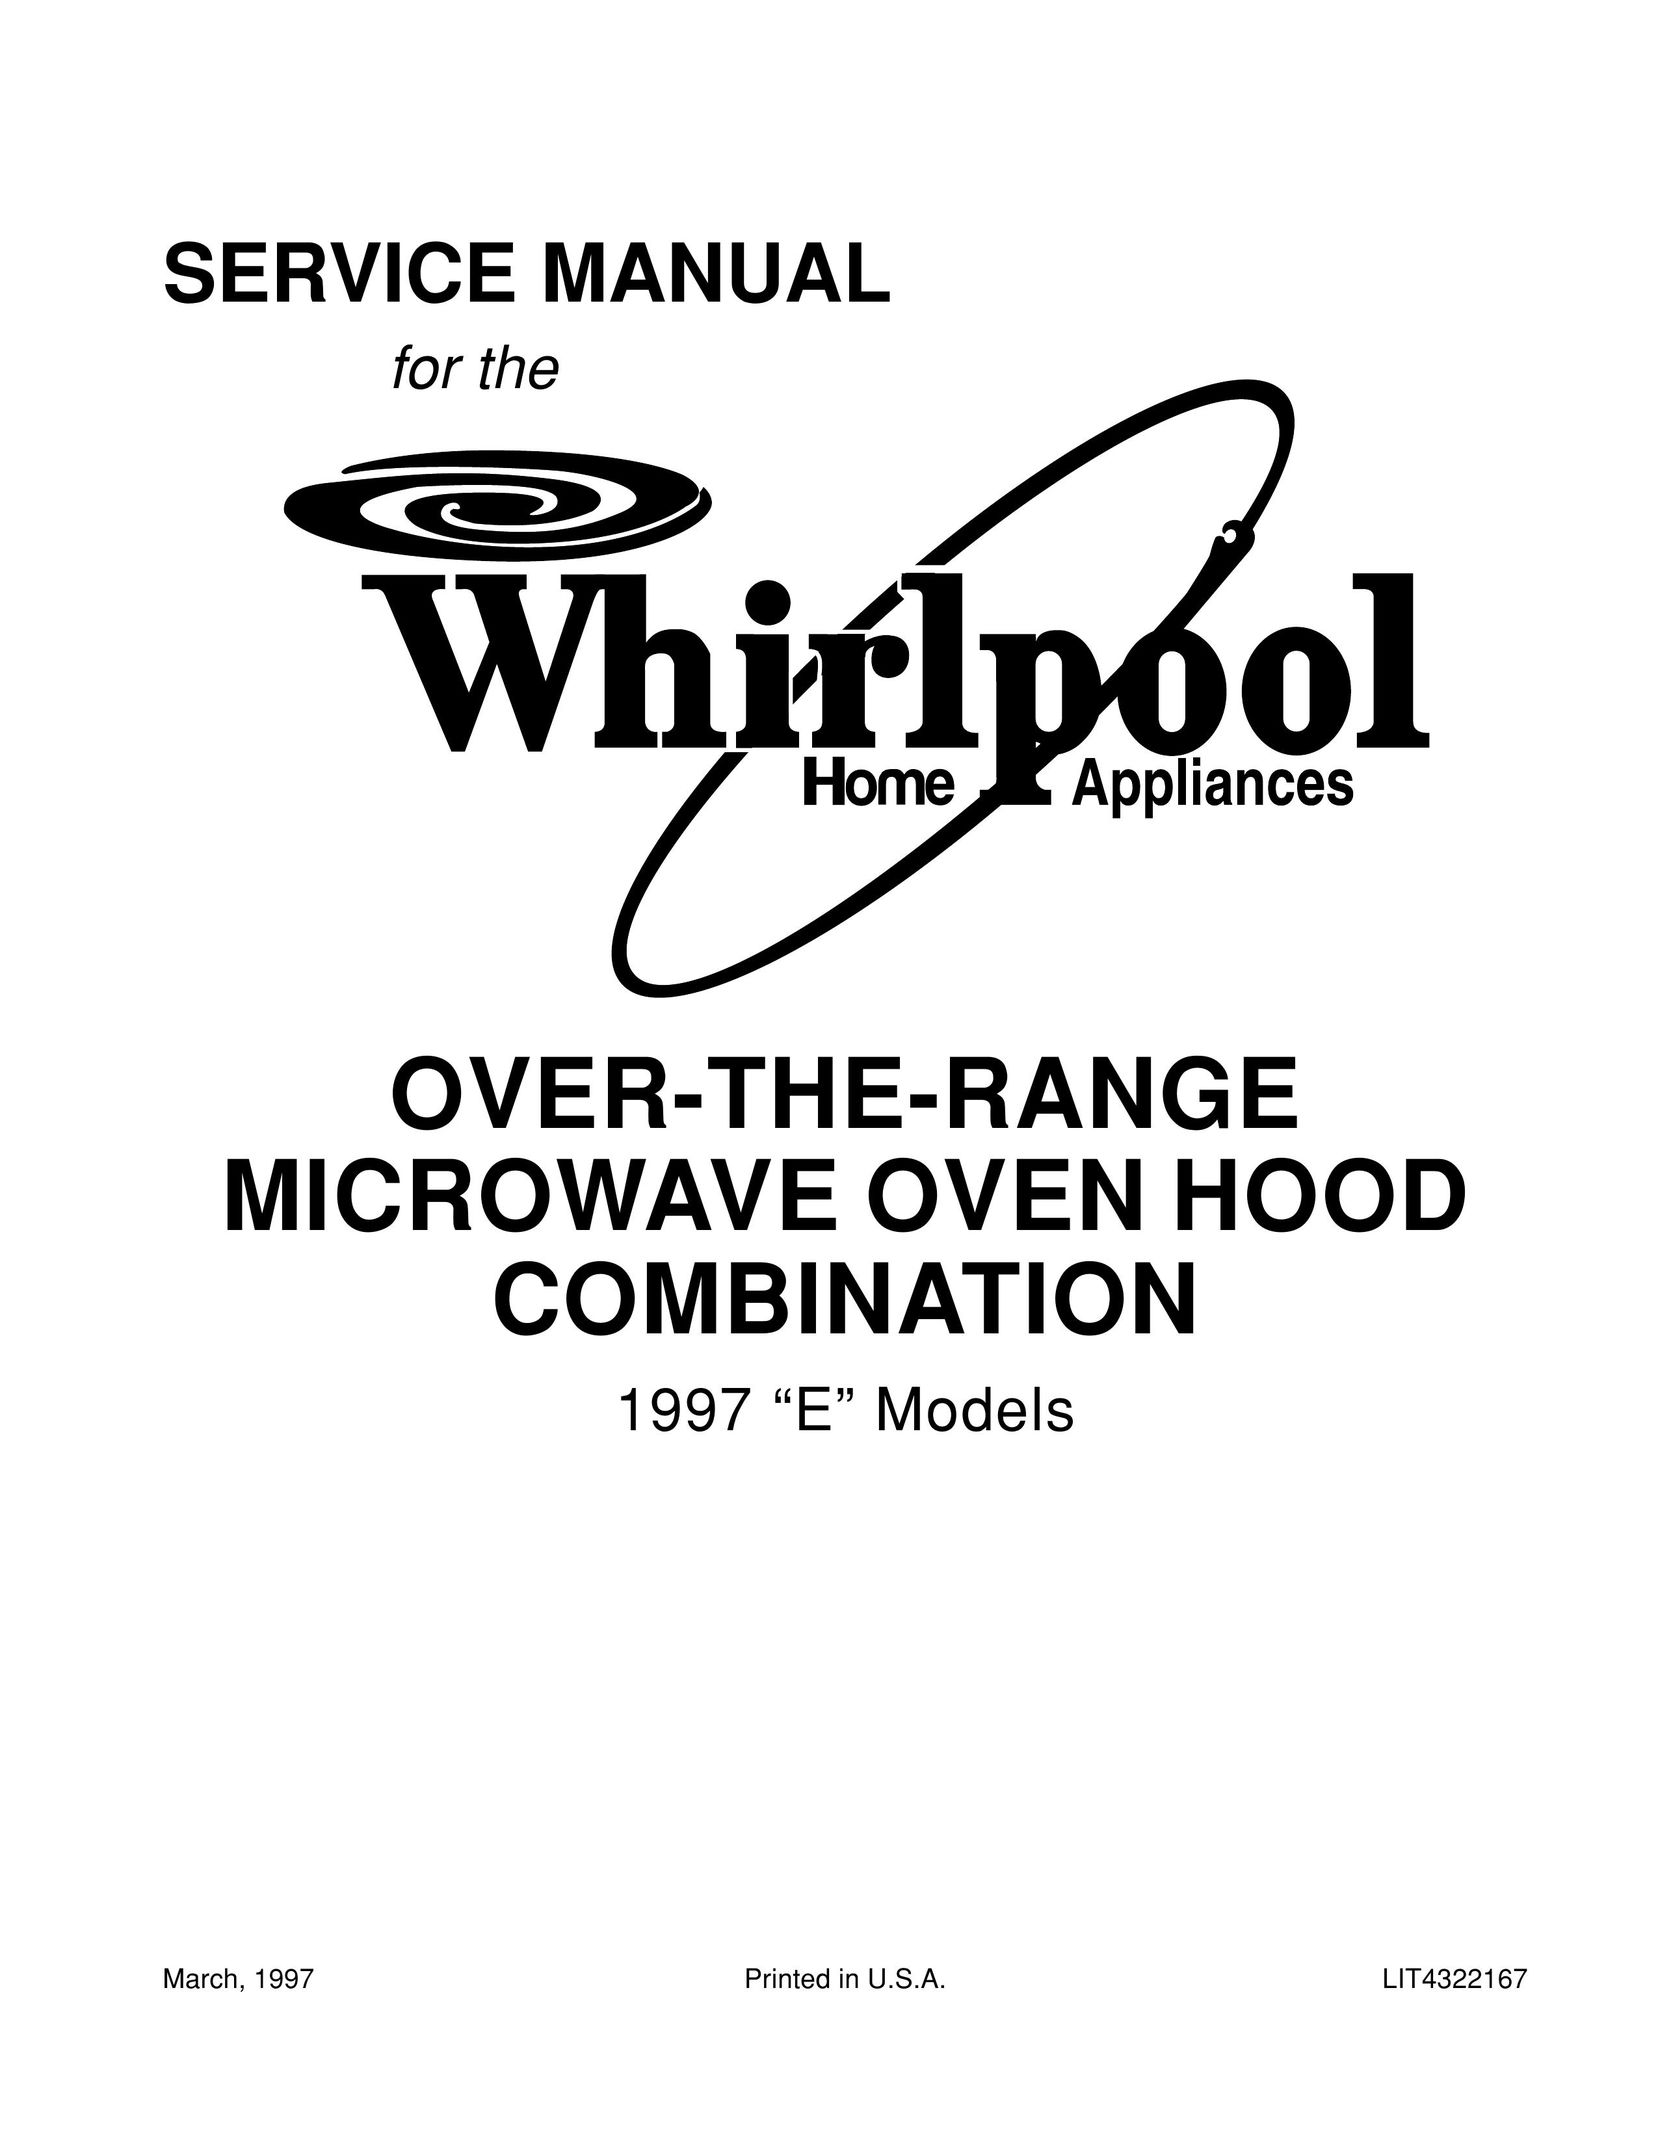 Whirlpool 1997 "E" Microwave Oven User Manual